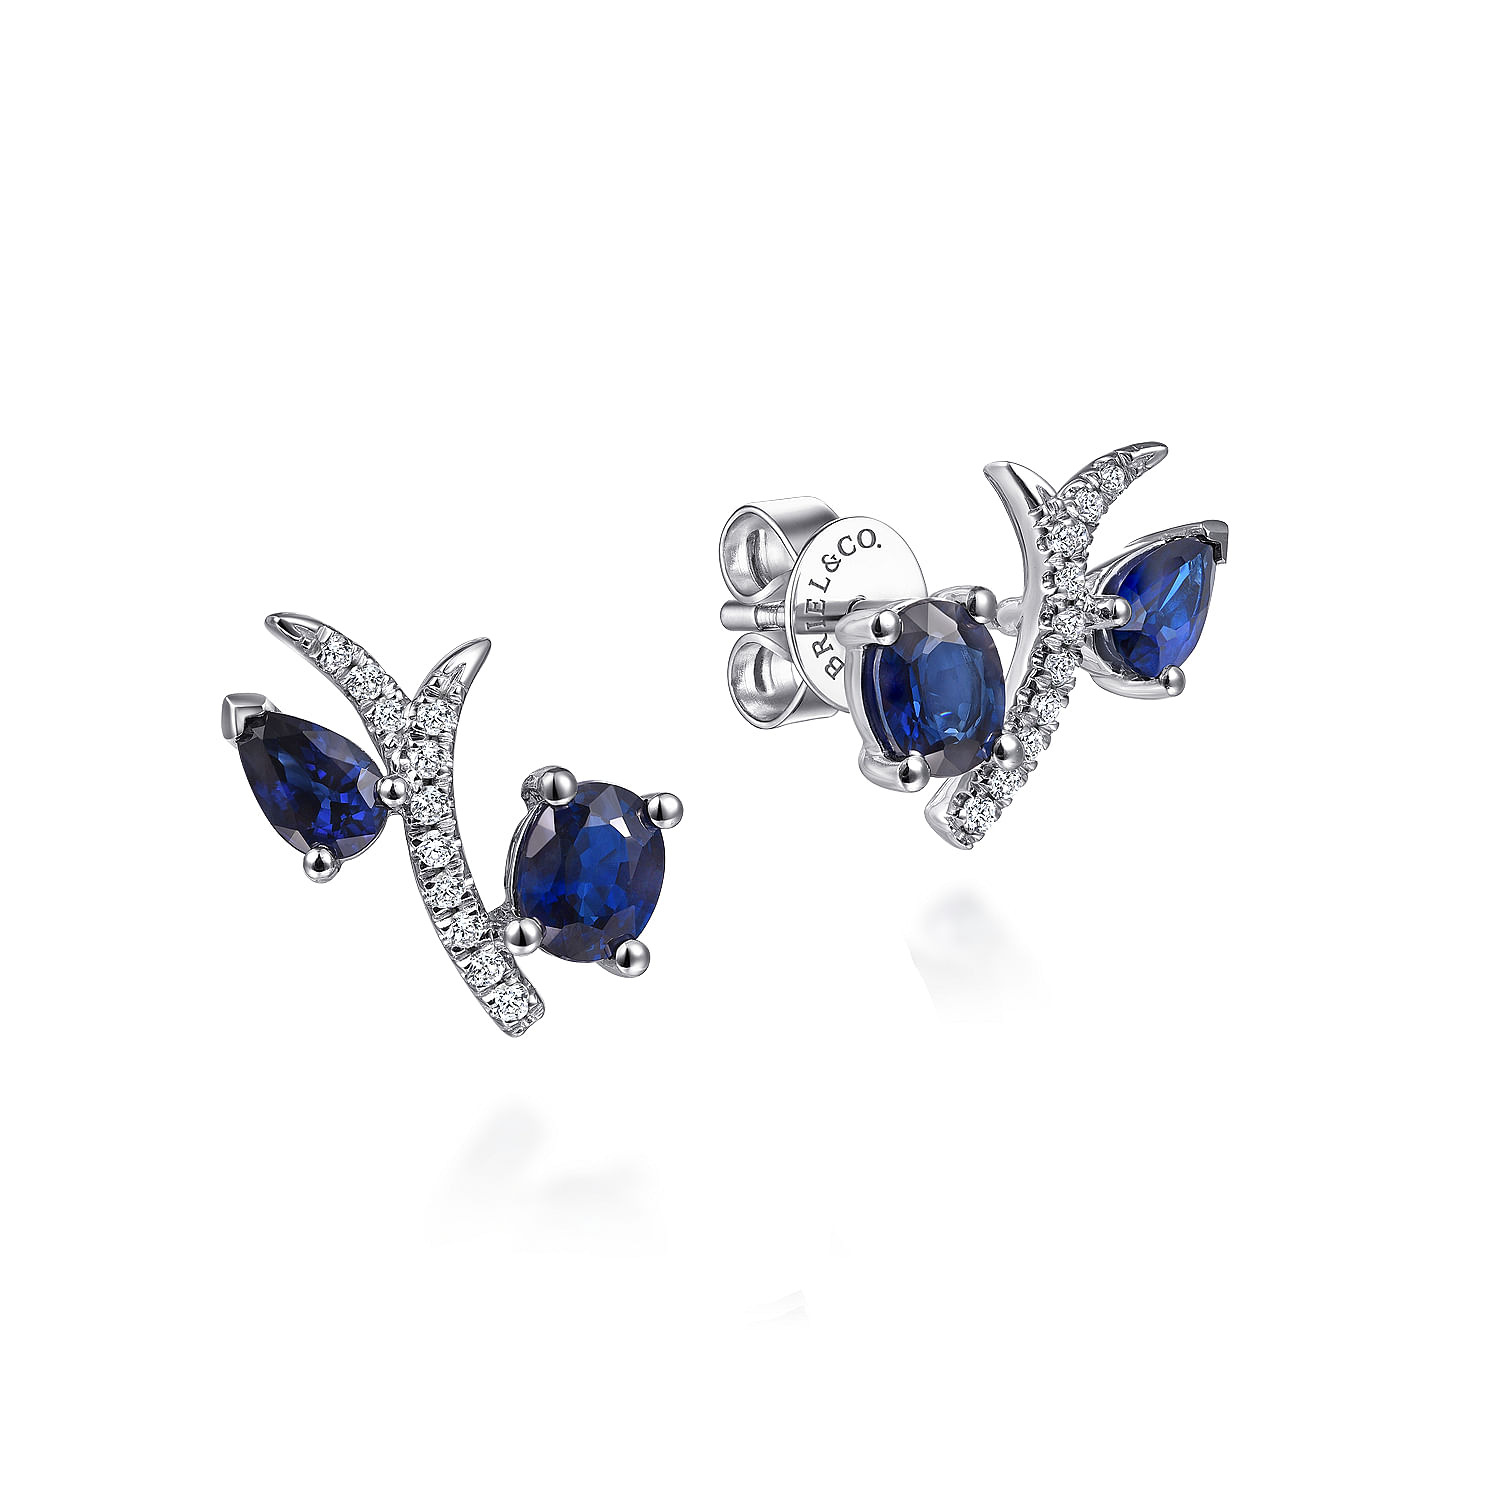 14K White Gold Pavé Diamond Oval & Pear Cut Sapphire Stud Earrings